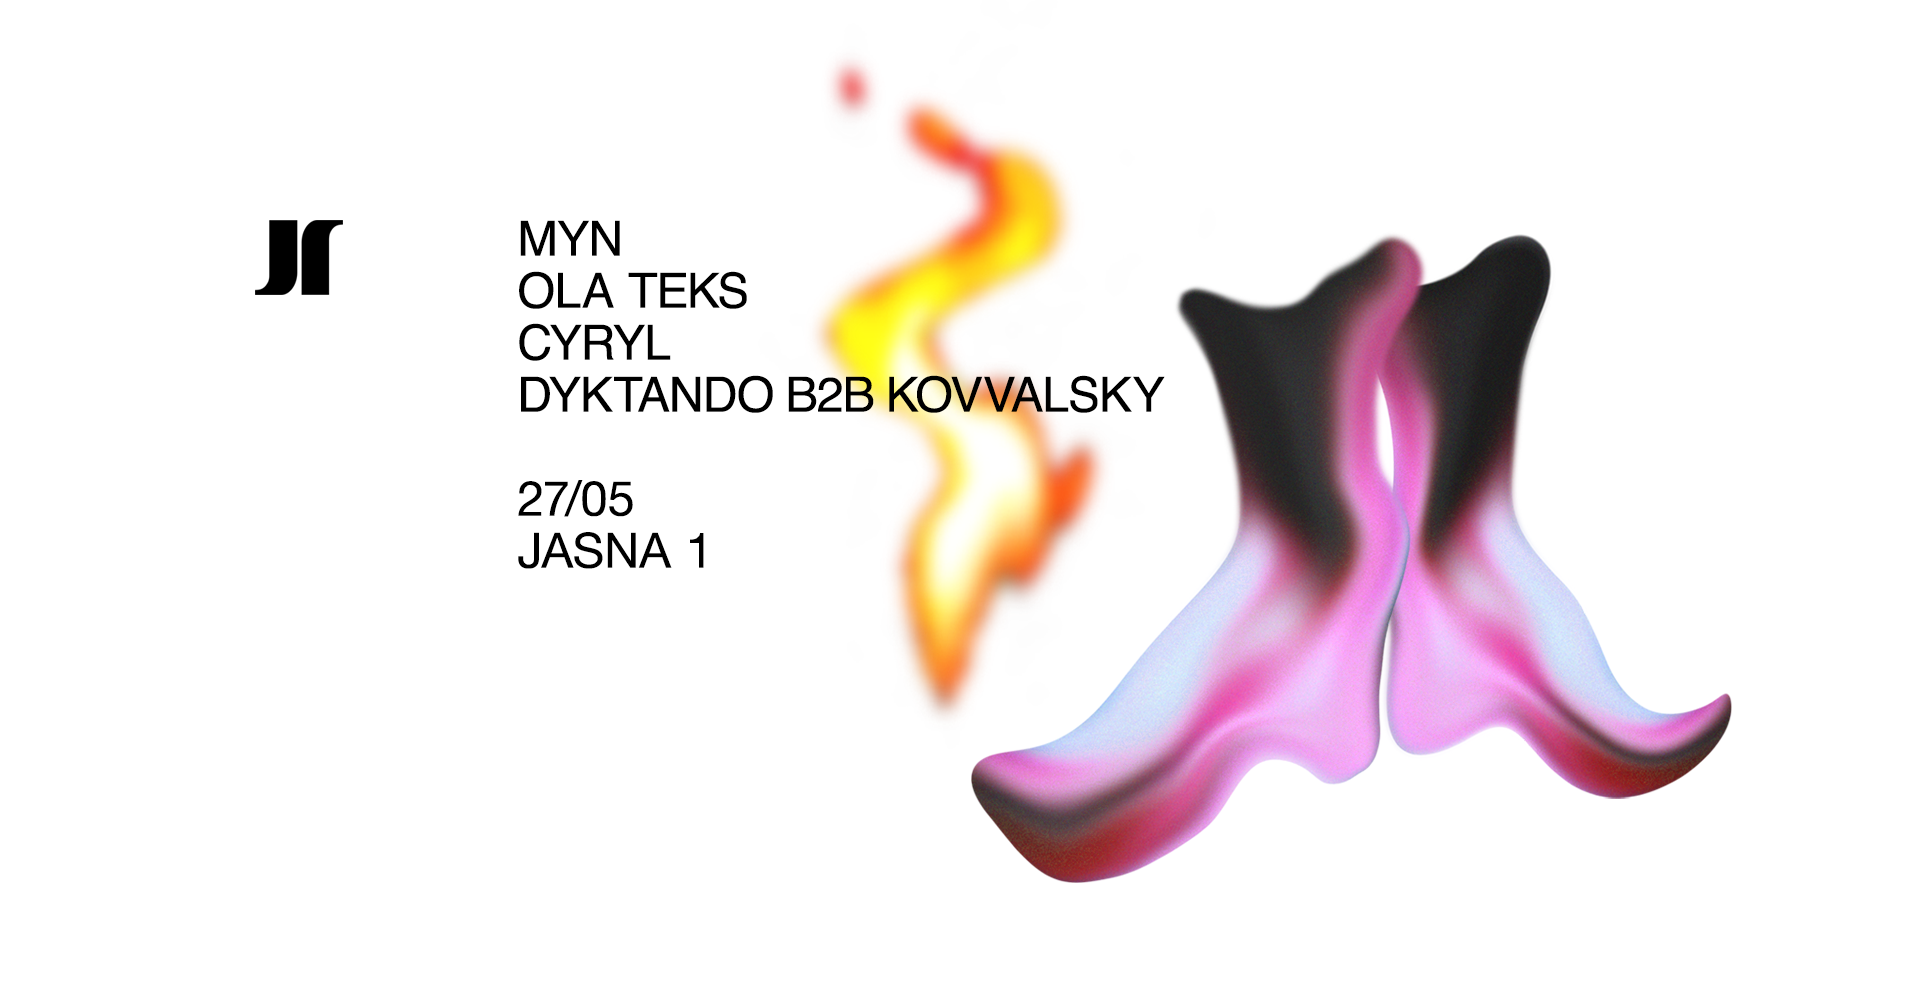 J1 - Myn, Dyktando B2B Kovvalsky / Ola Teks, Cyryl - Flyer front